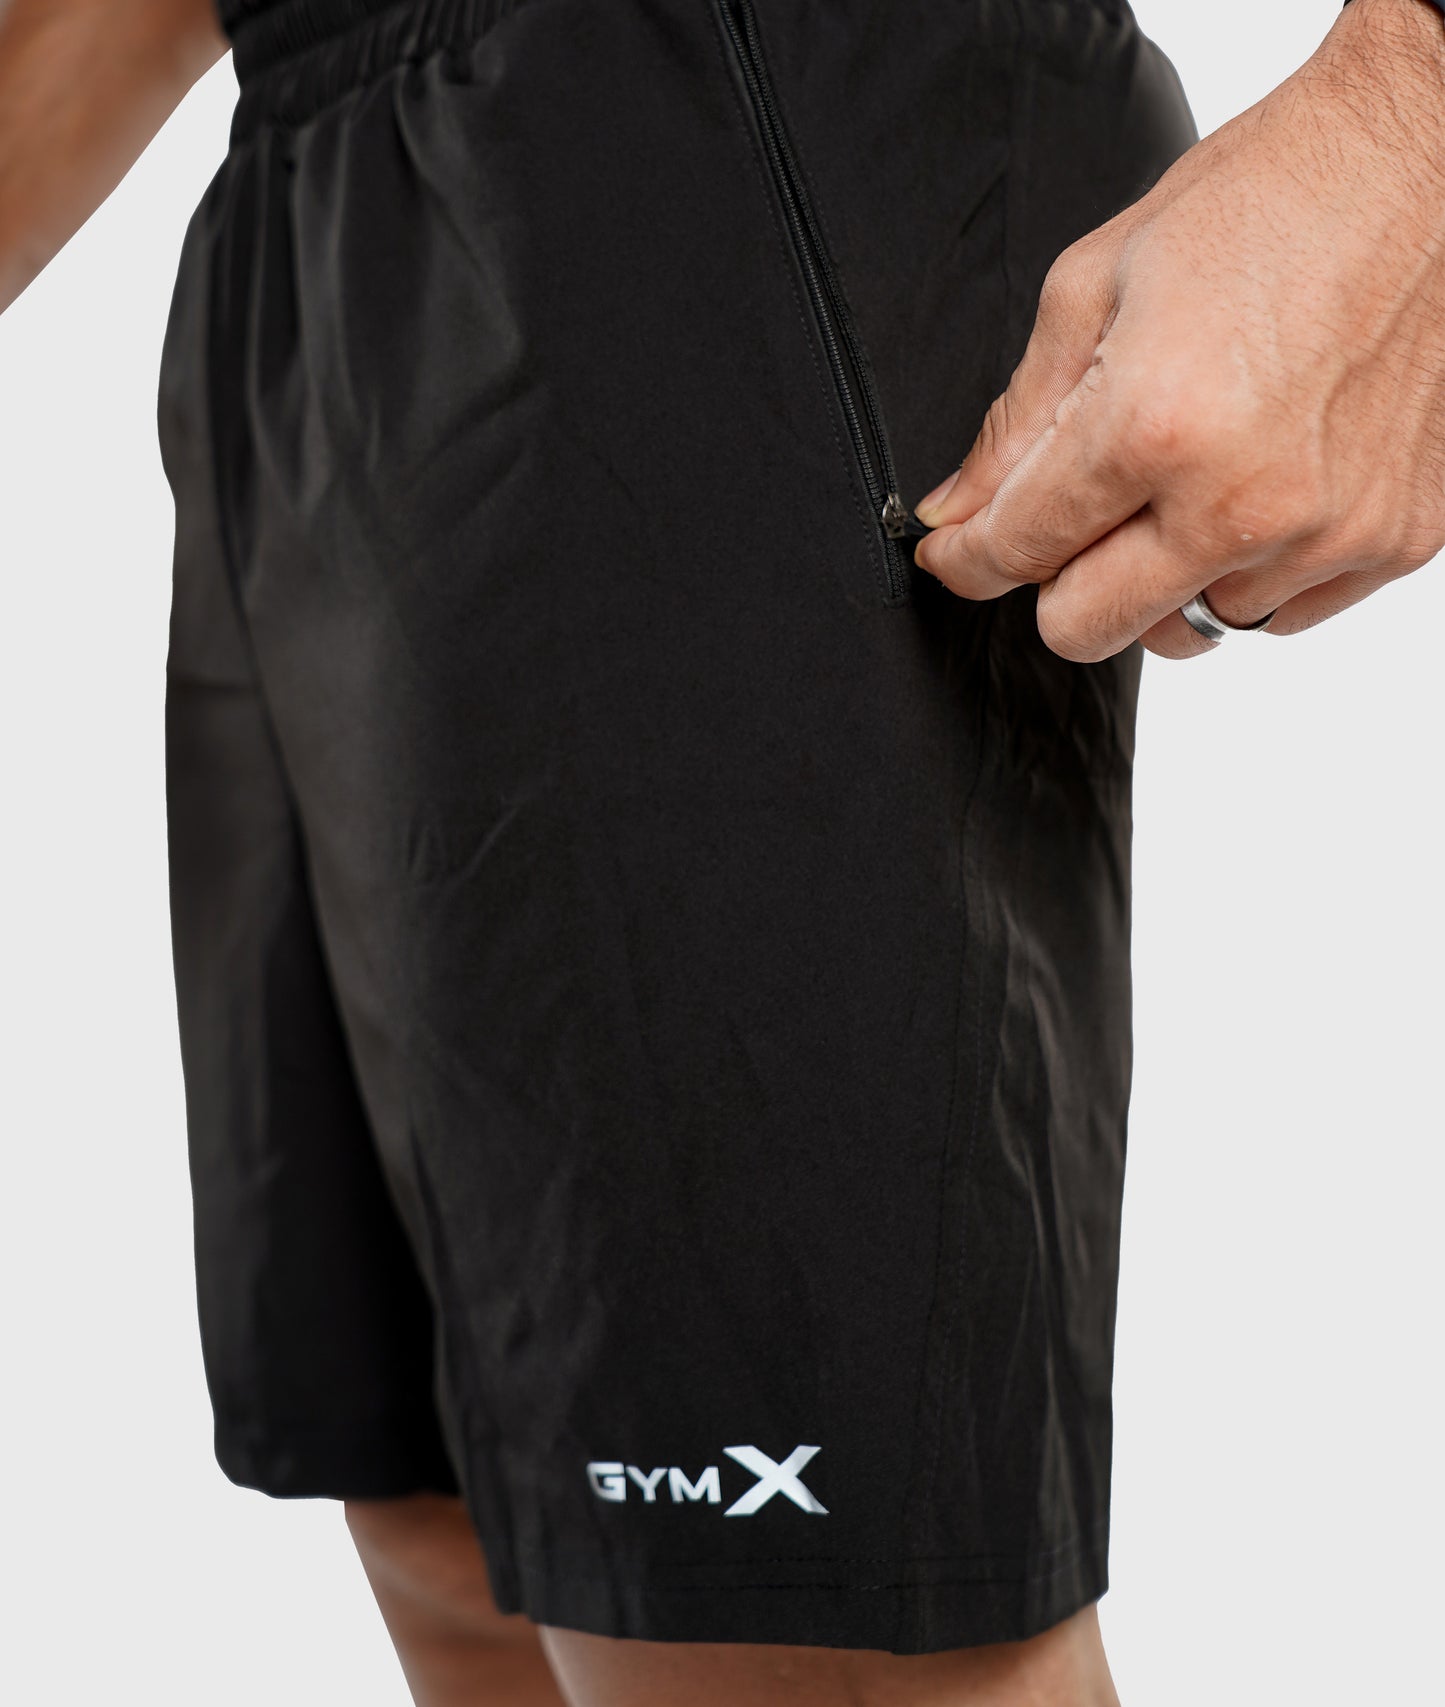 Vitality GymX Shorts: Black